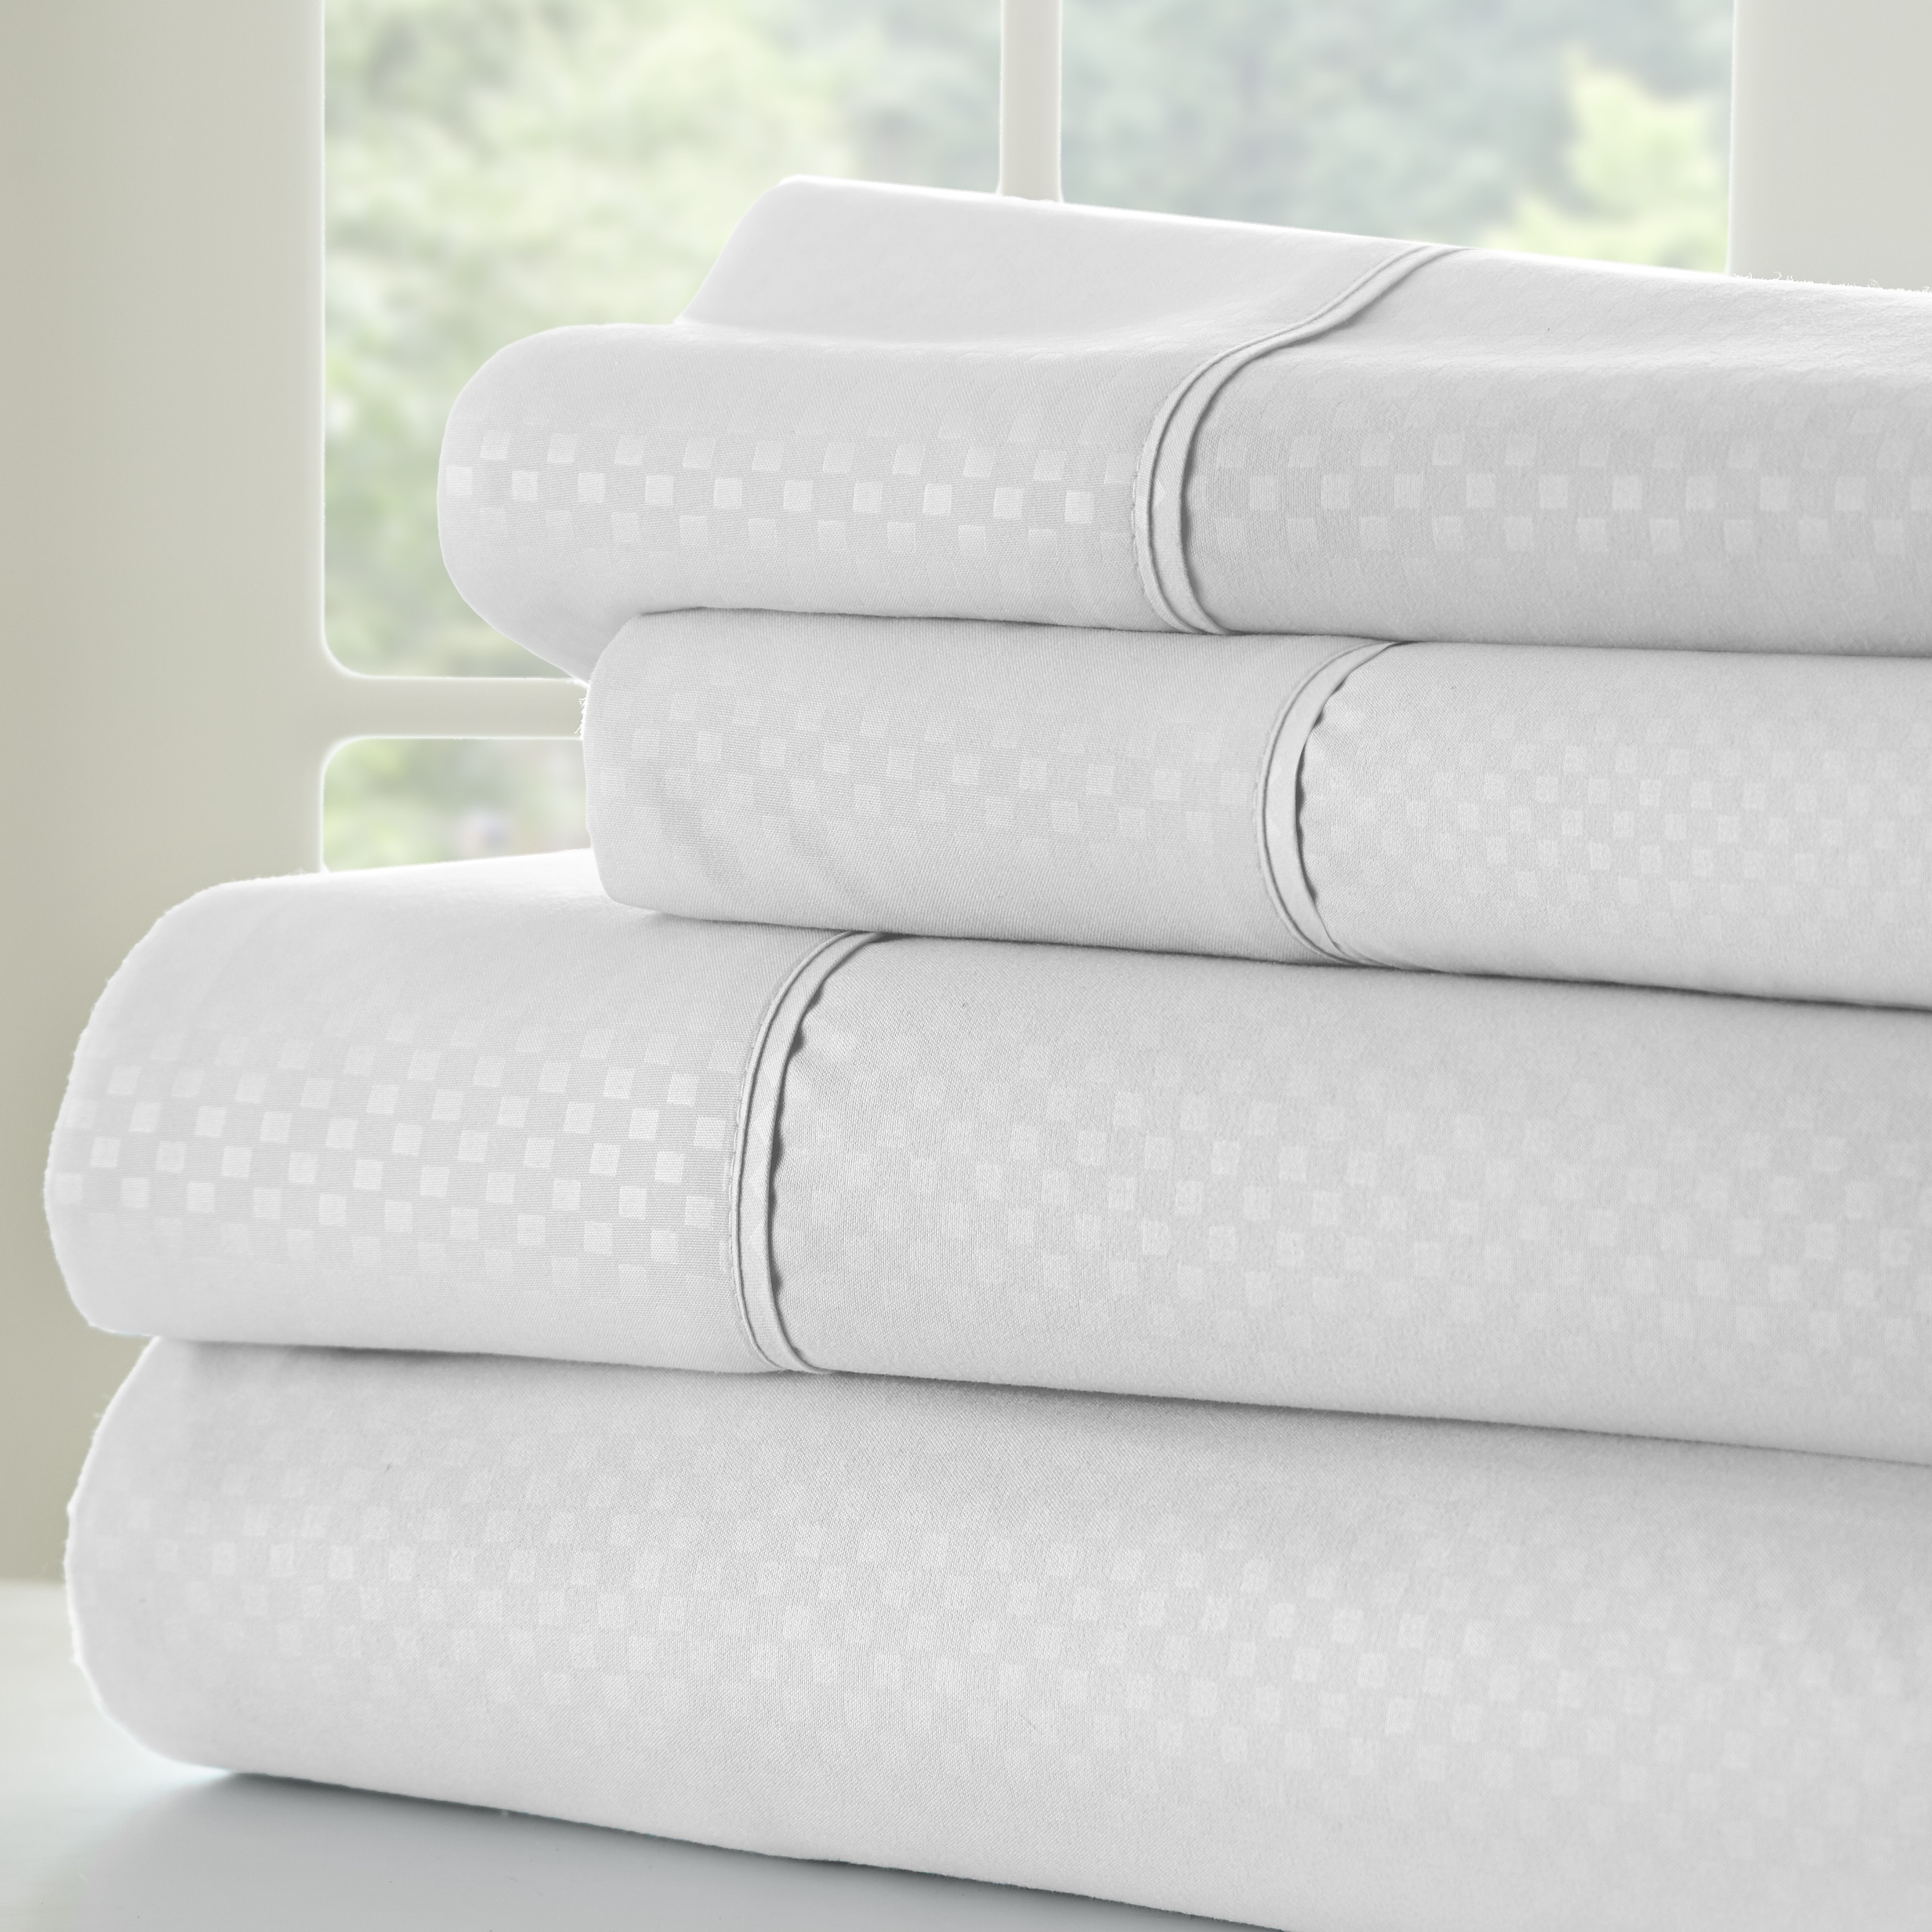 ienjoy Home Premium Ultra Soft Checkered Design 4 Piece Bed Sheet Set